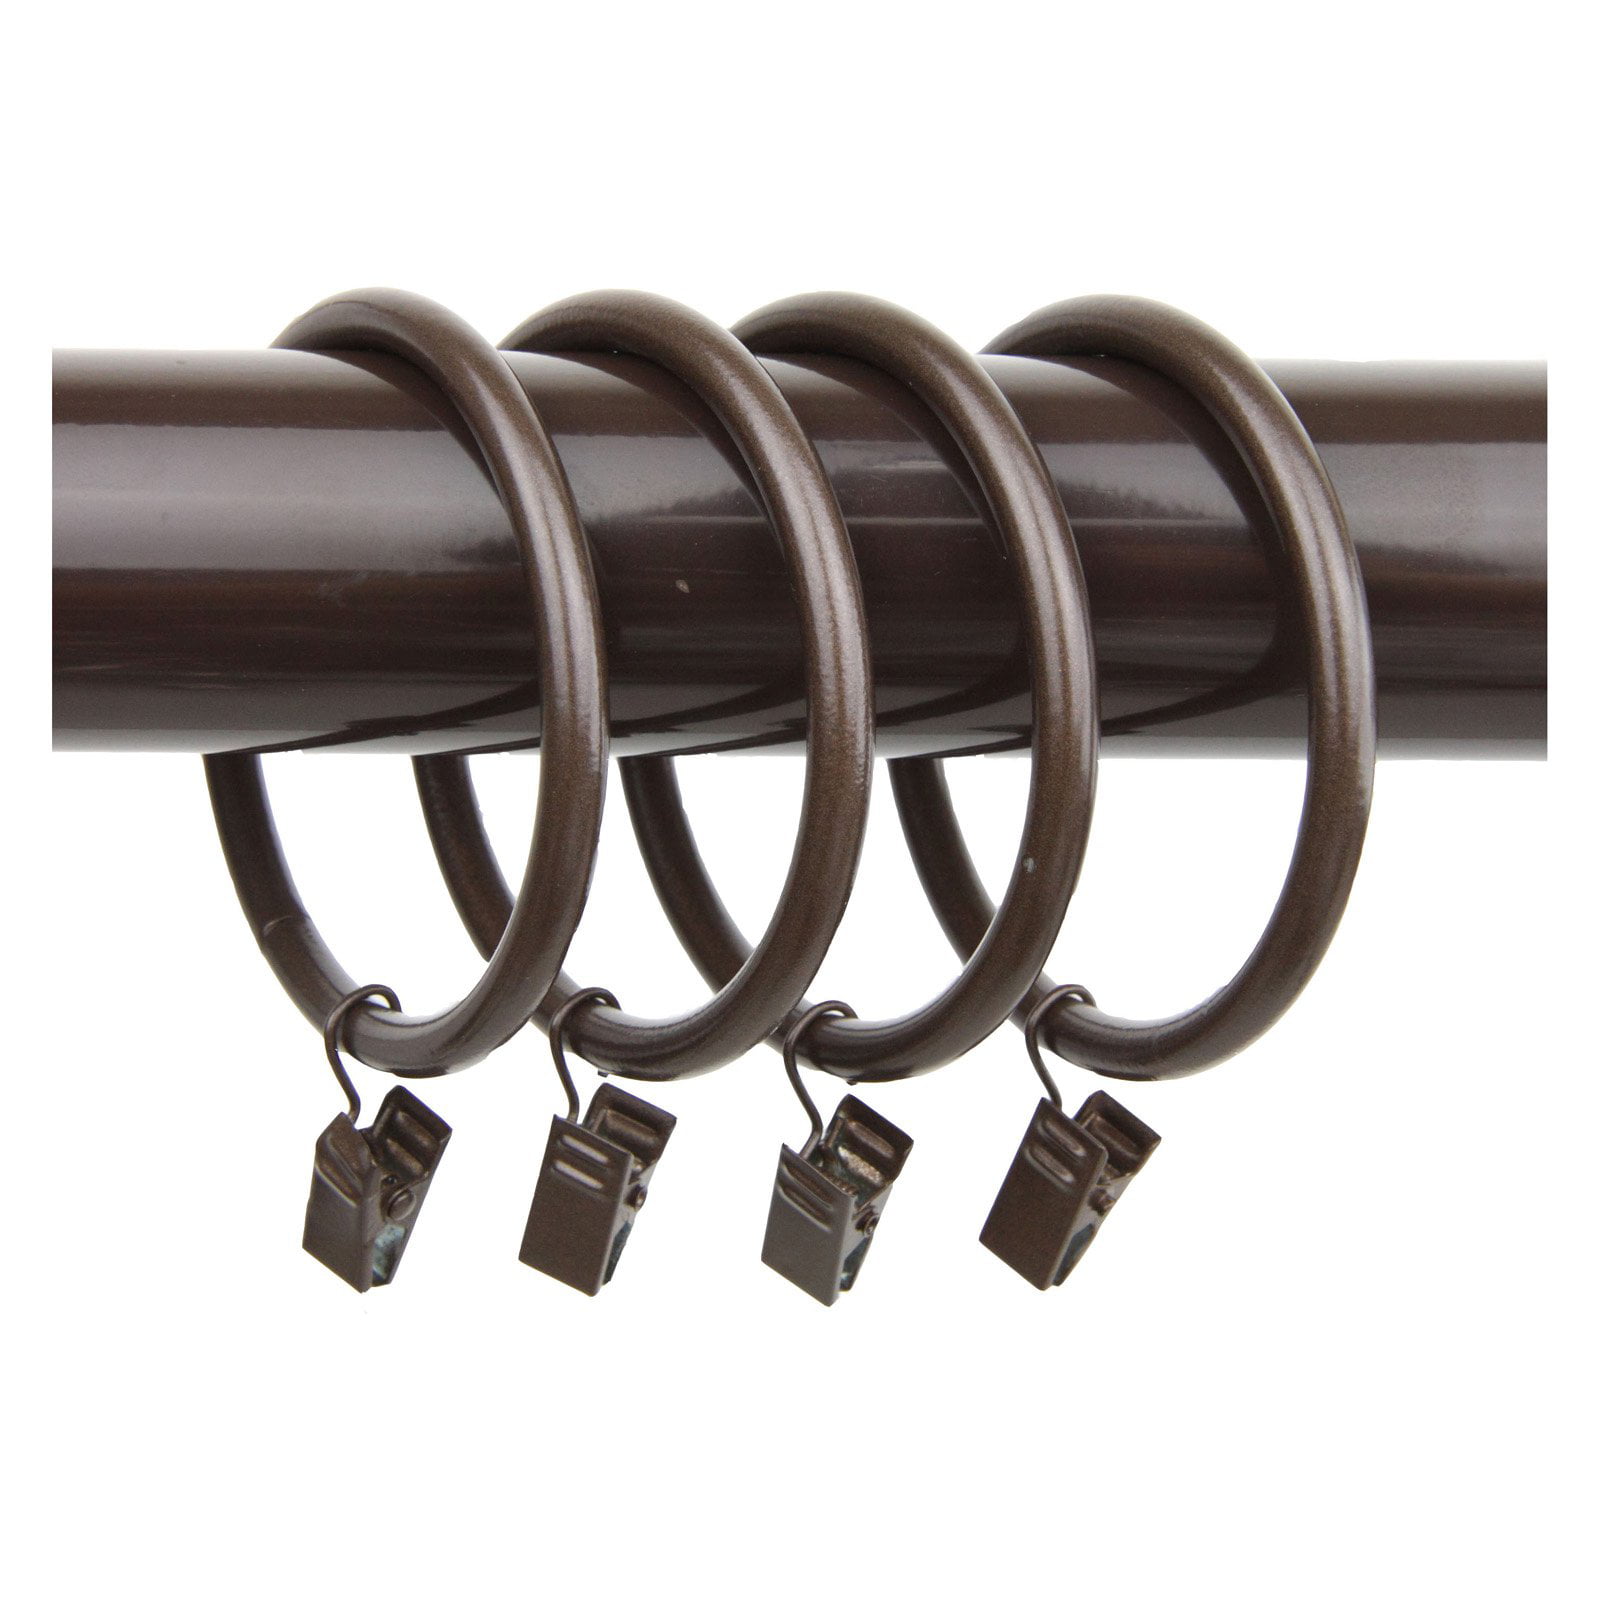 20x METAL 20mm INNER DIAMETER CURTAIN RINGS Hoop Fits 16mm Curtain Pole Rod Rail 